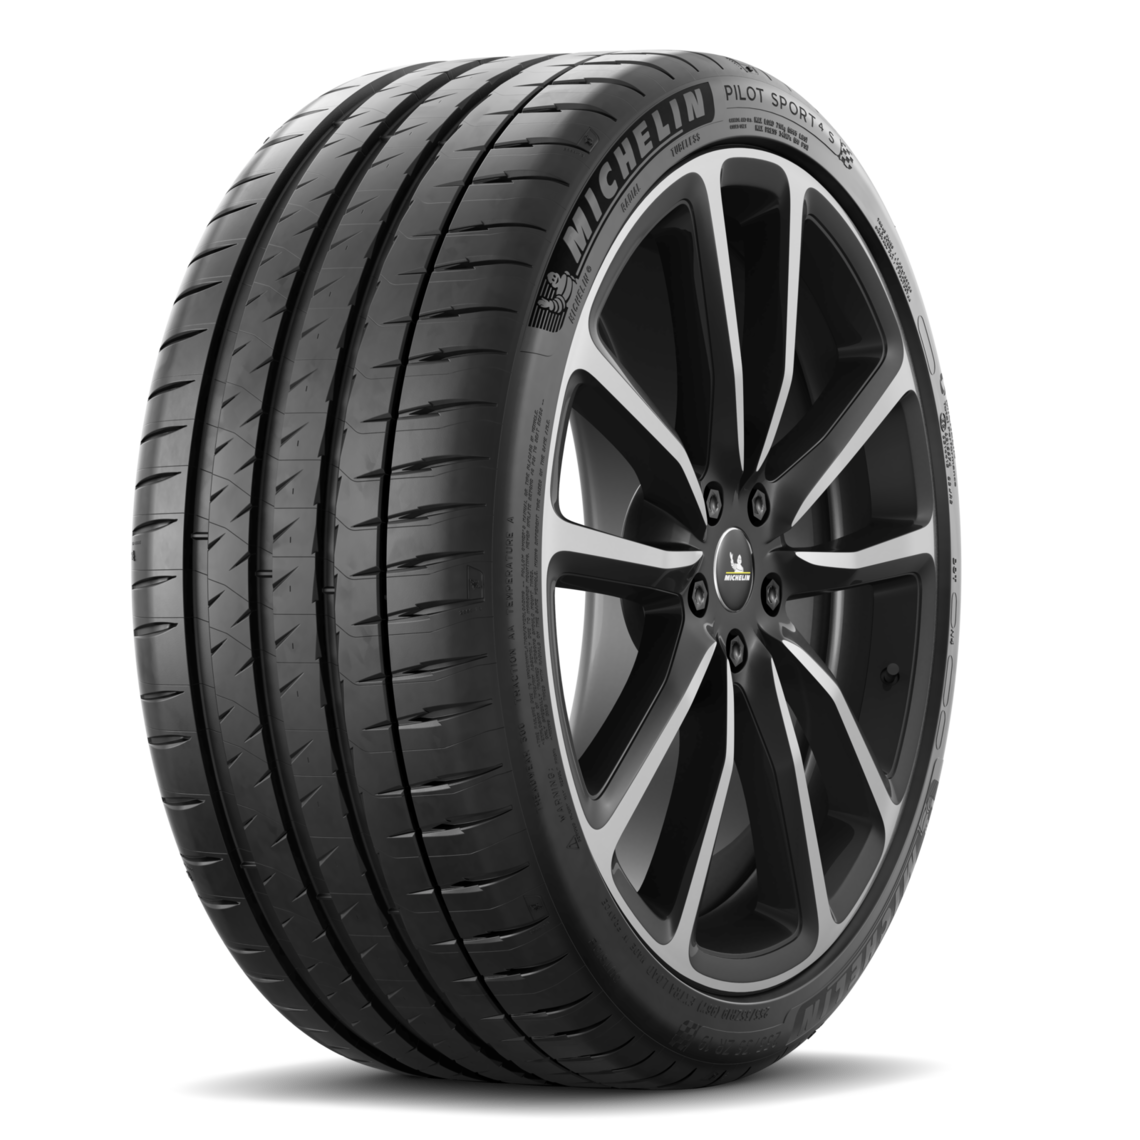 2254018 2 x 225 40 18 92Y Michelin Pilot Sport 4 Performance Road Tyre XL 